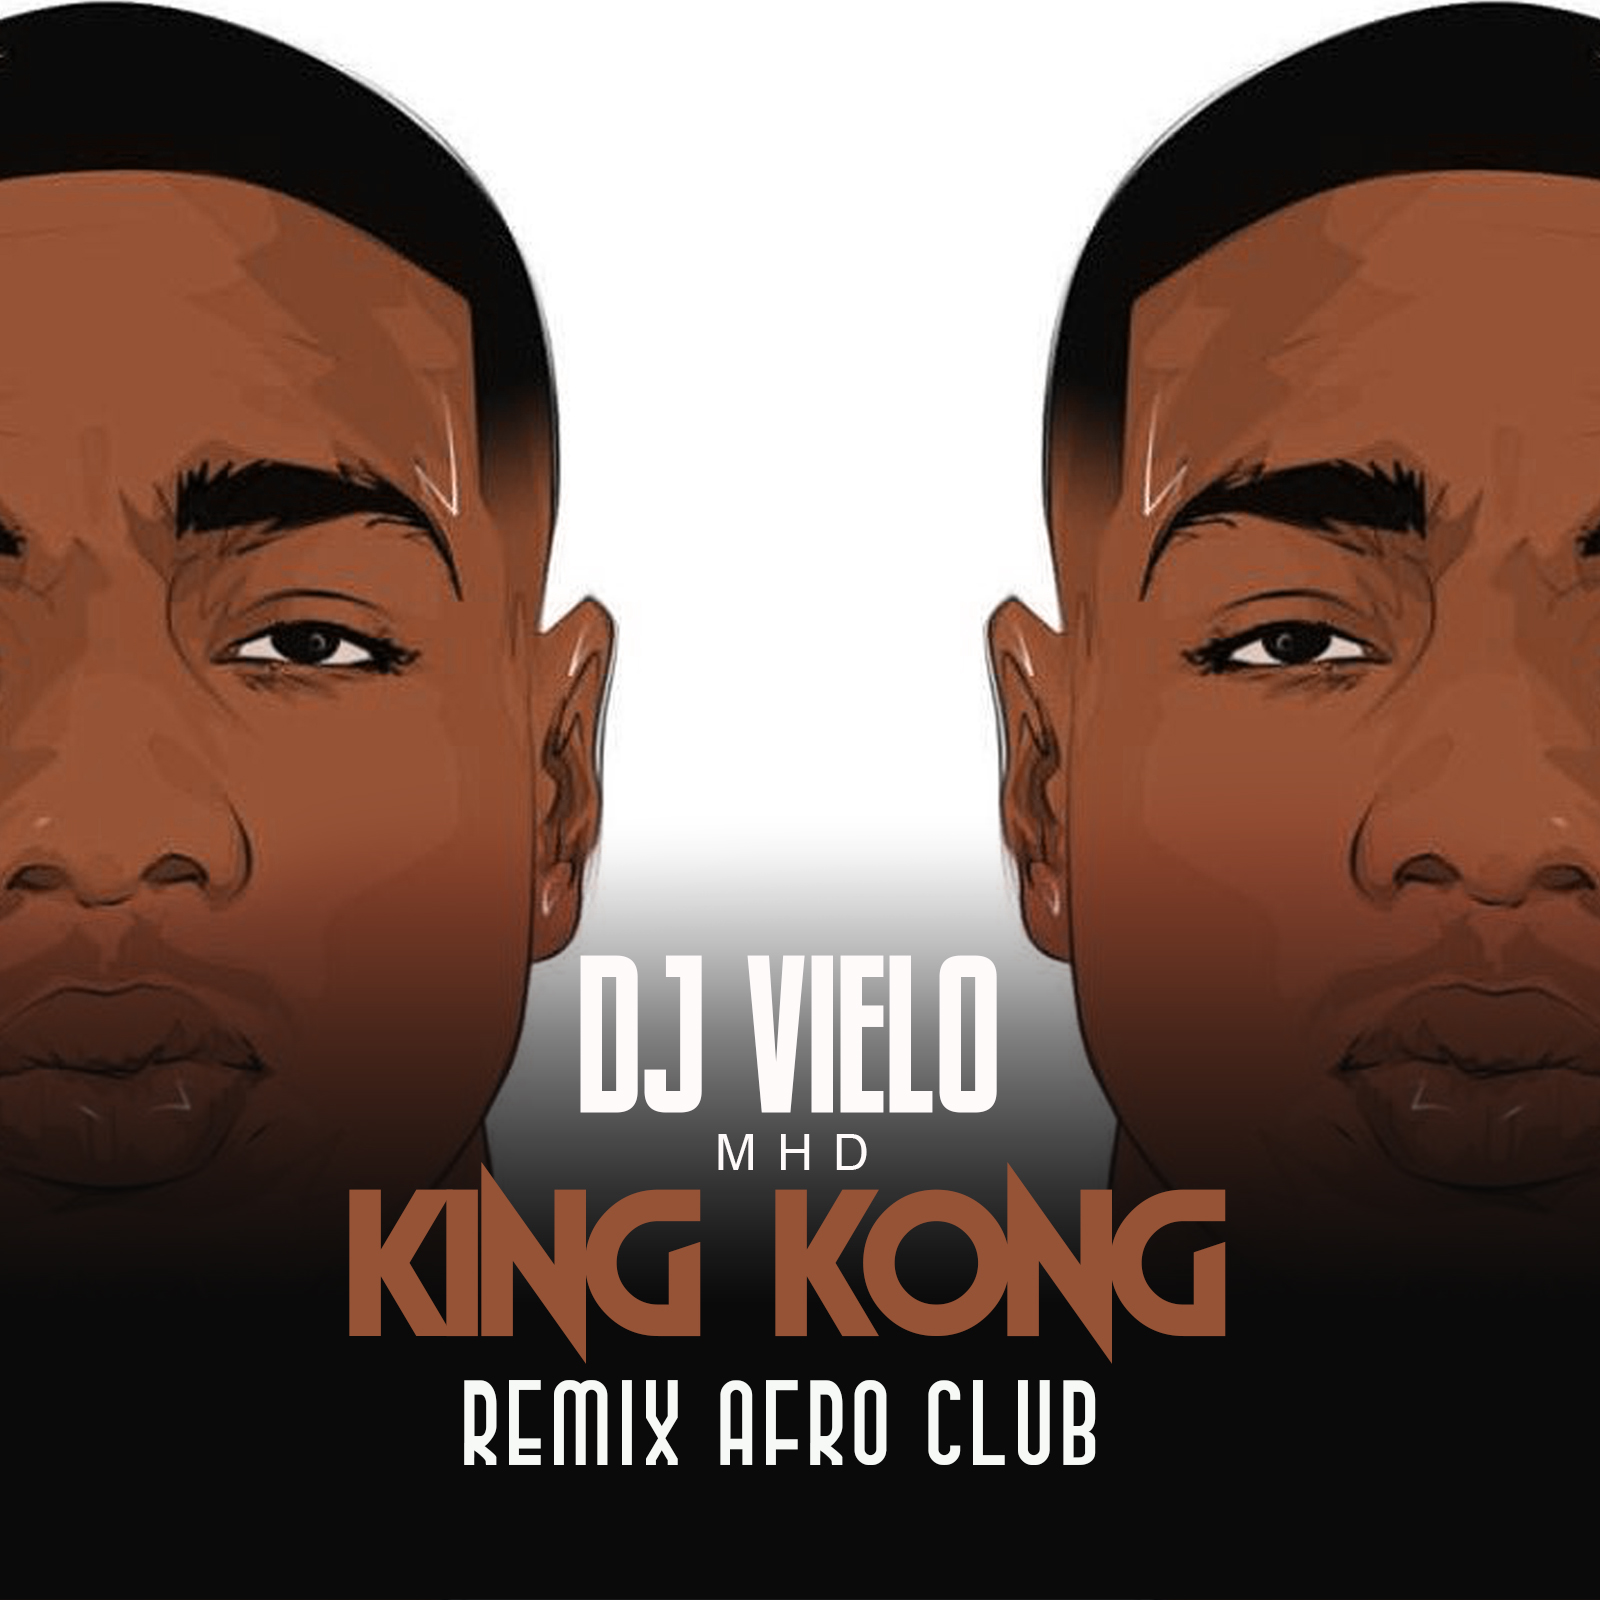 تحميل Dj Vielo X MHD - AFRO TRAP Part.11 (King Kong) Remix Afro Club DISPO SUR SPOTIFY, DEEZER, ITUNES